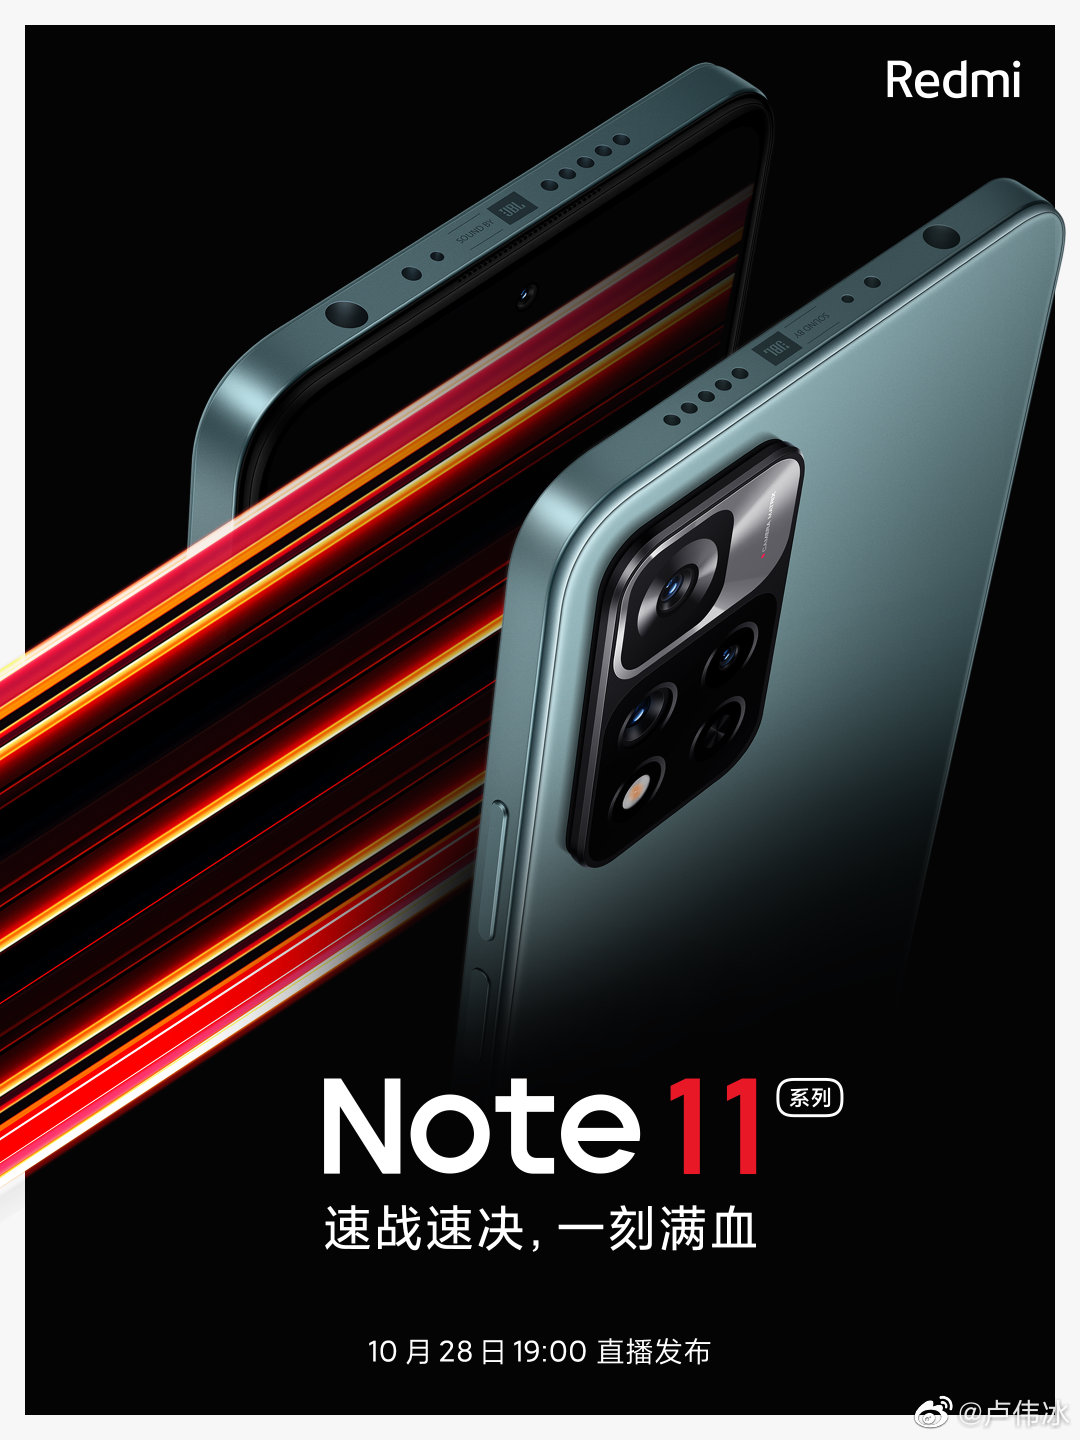 Redmi Note 11直角边框确定 全身照很像iPhone 13